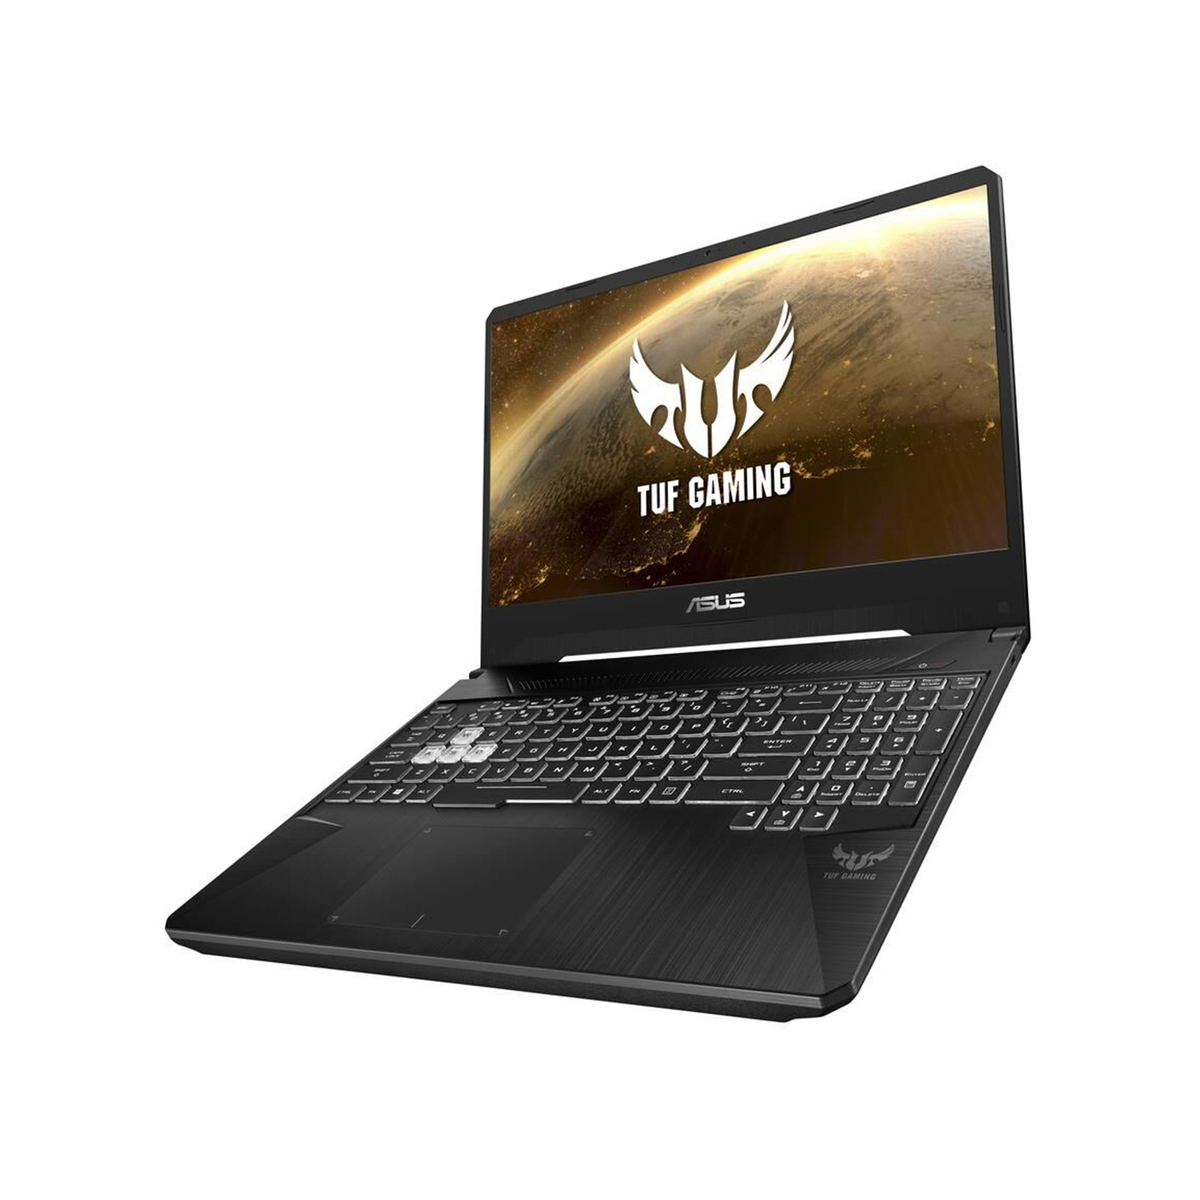 Asus TUF Gaming Laptop FX505DT-BQ045T,AMD Ryzen 7,16GB RAM,512GB SSD,4GB NVIDIA GeForce GTX 1650,15.6'FHD,Windows 10